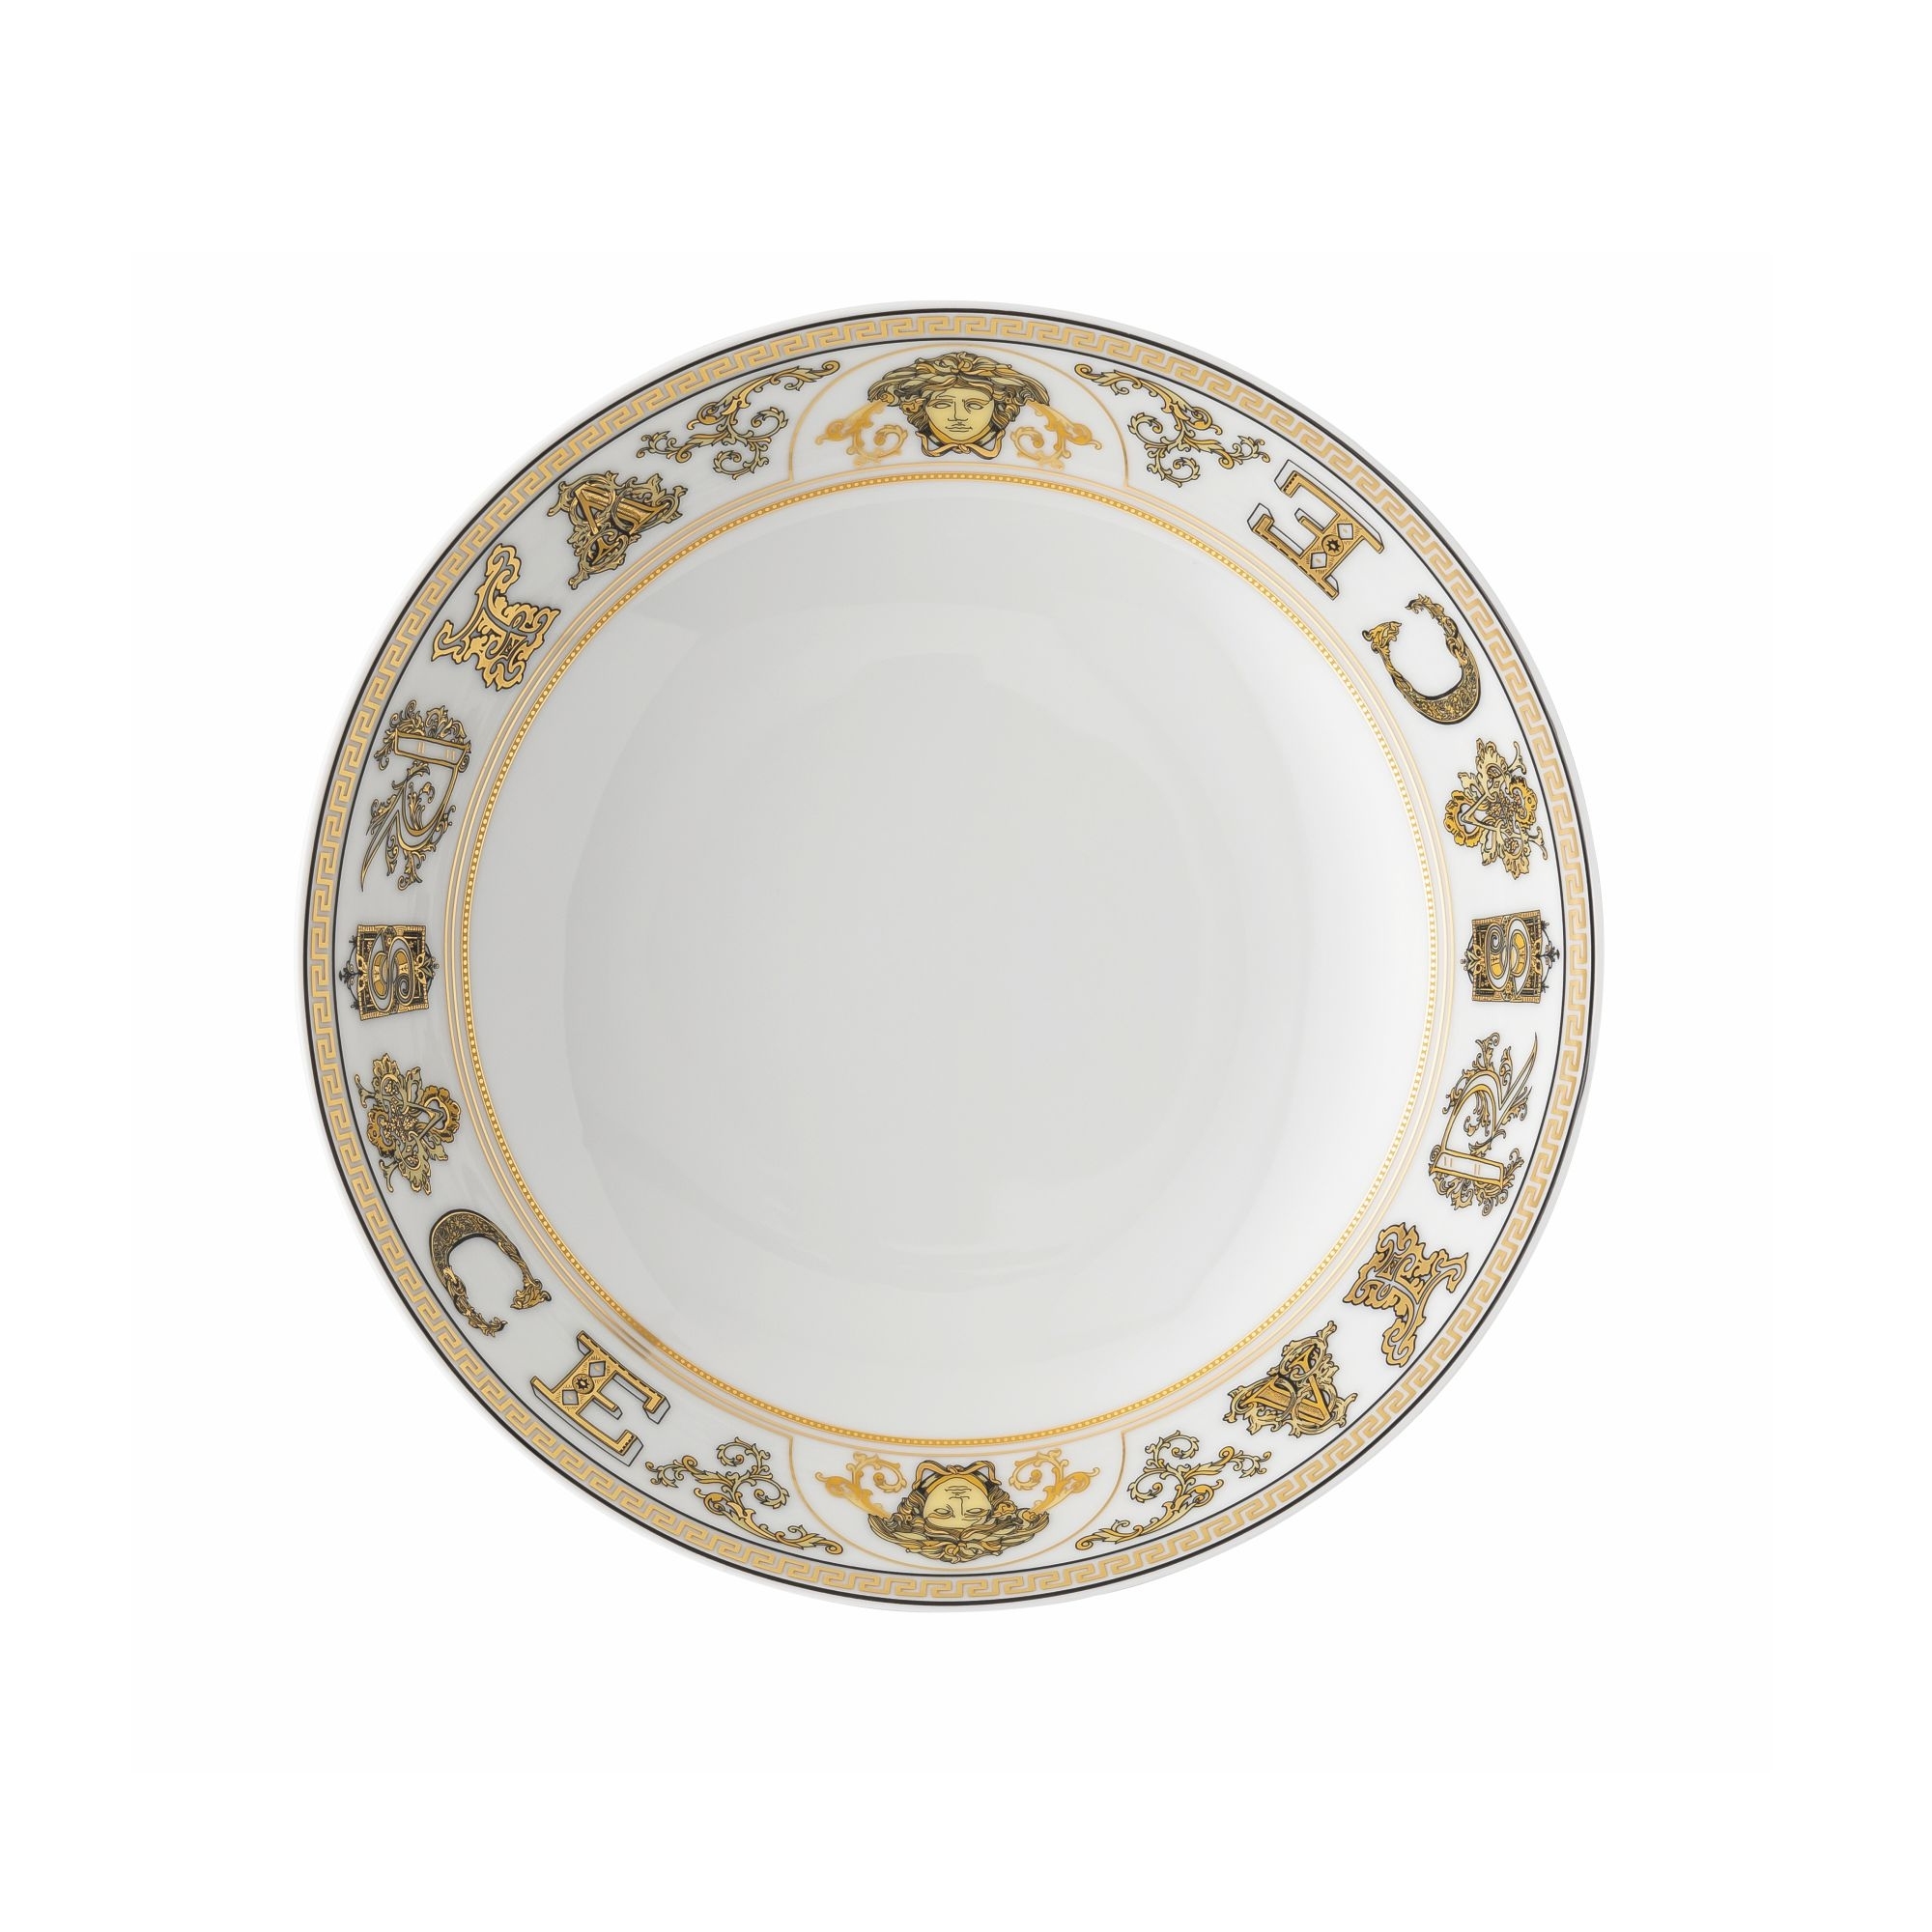 Rosenthal Versace Virtus Gala soup plate 22 cm